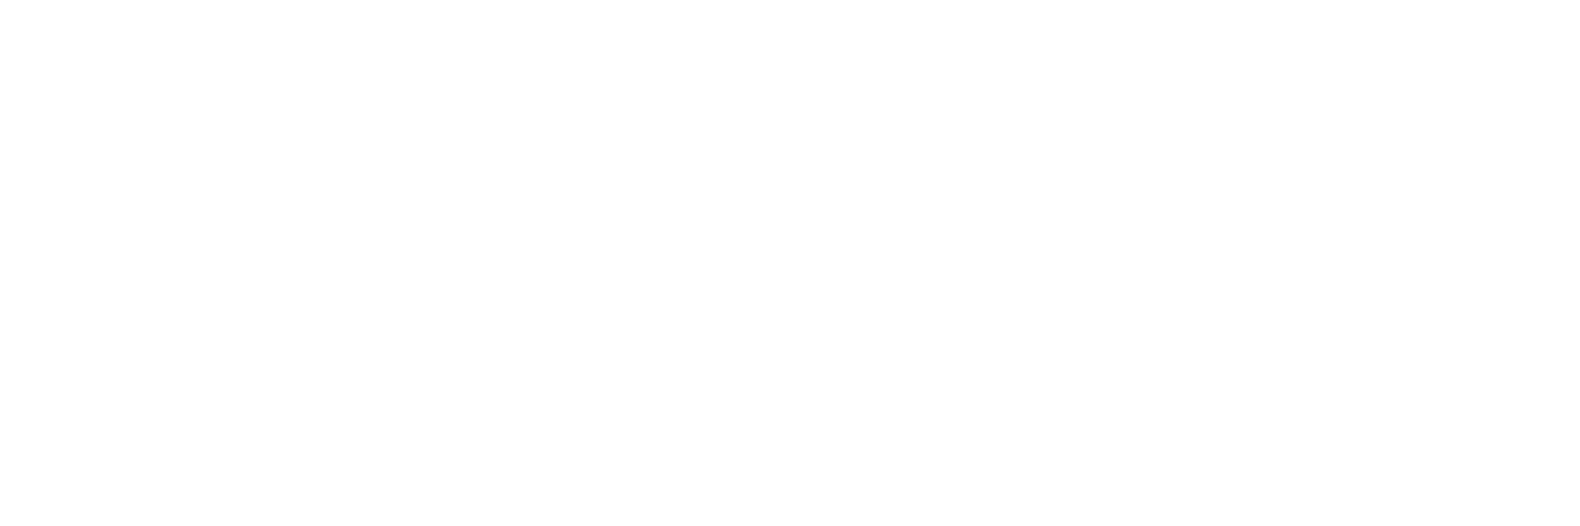 Aabenraa kommune logo